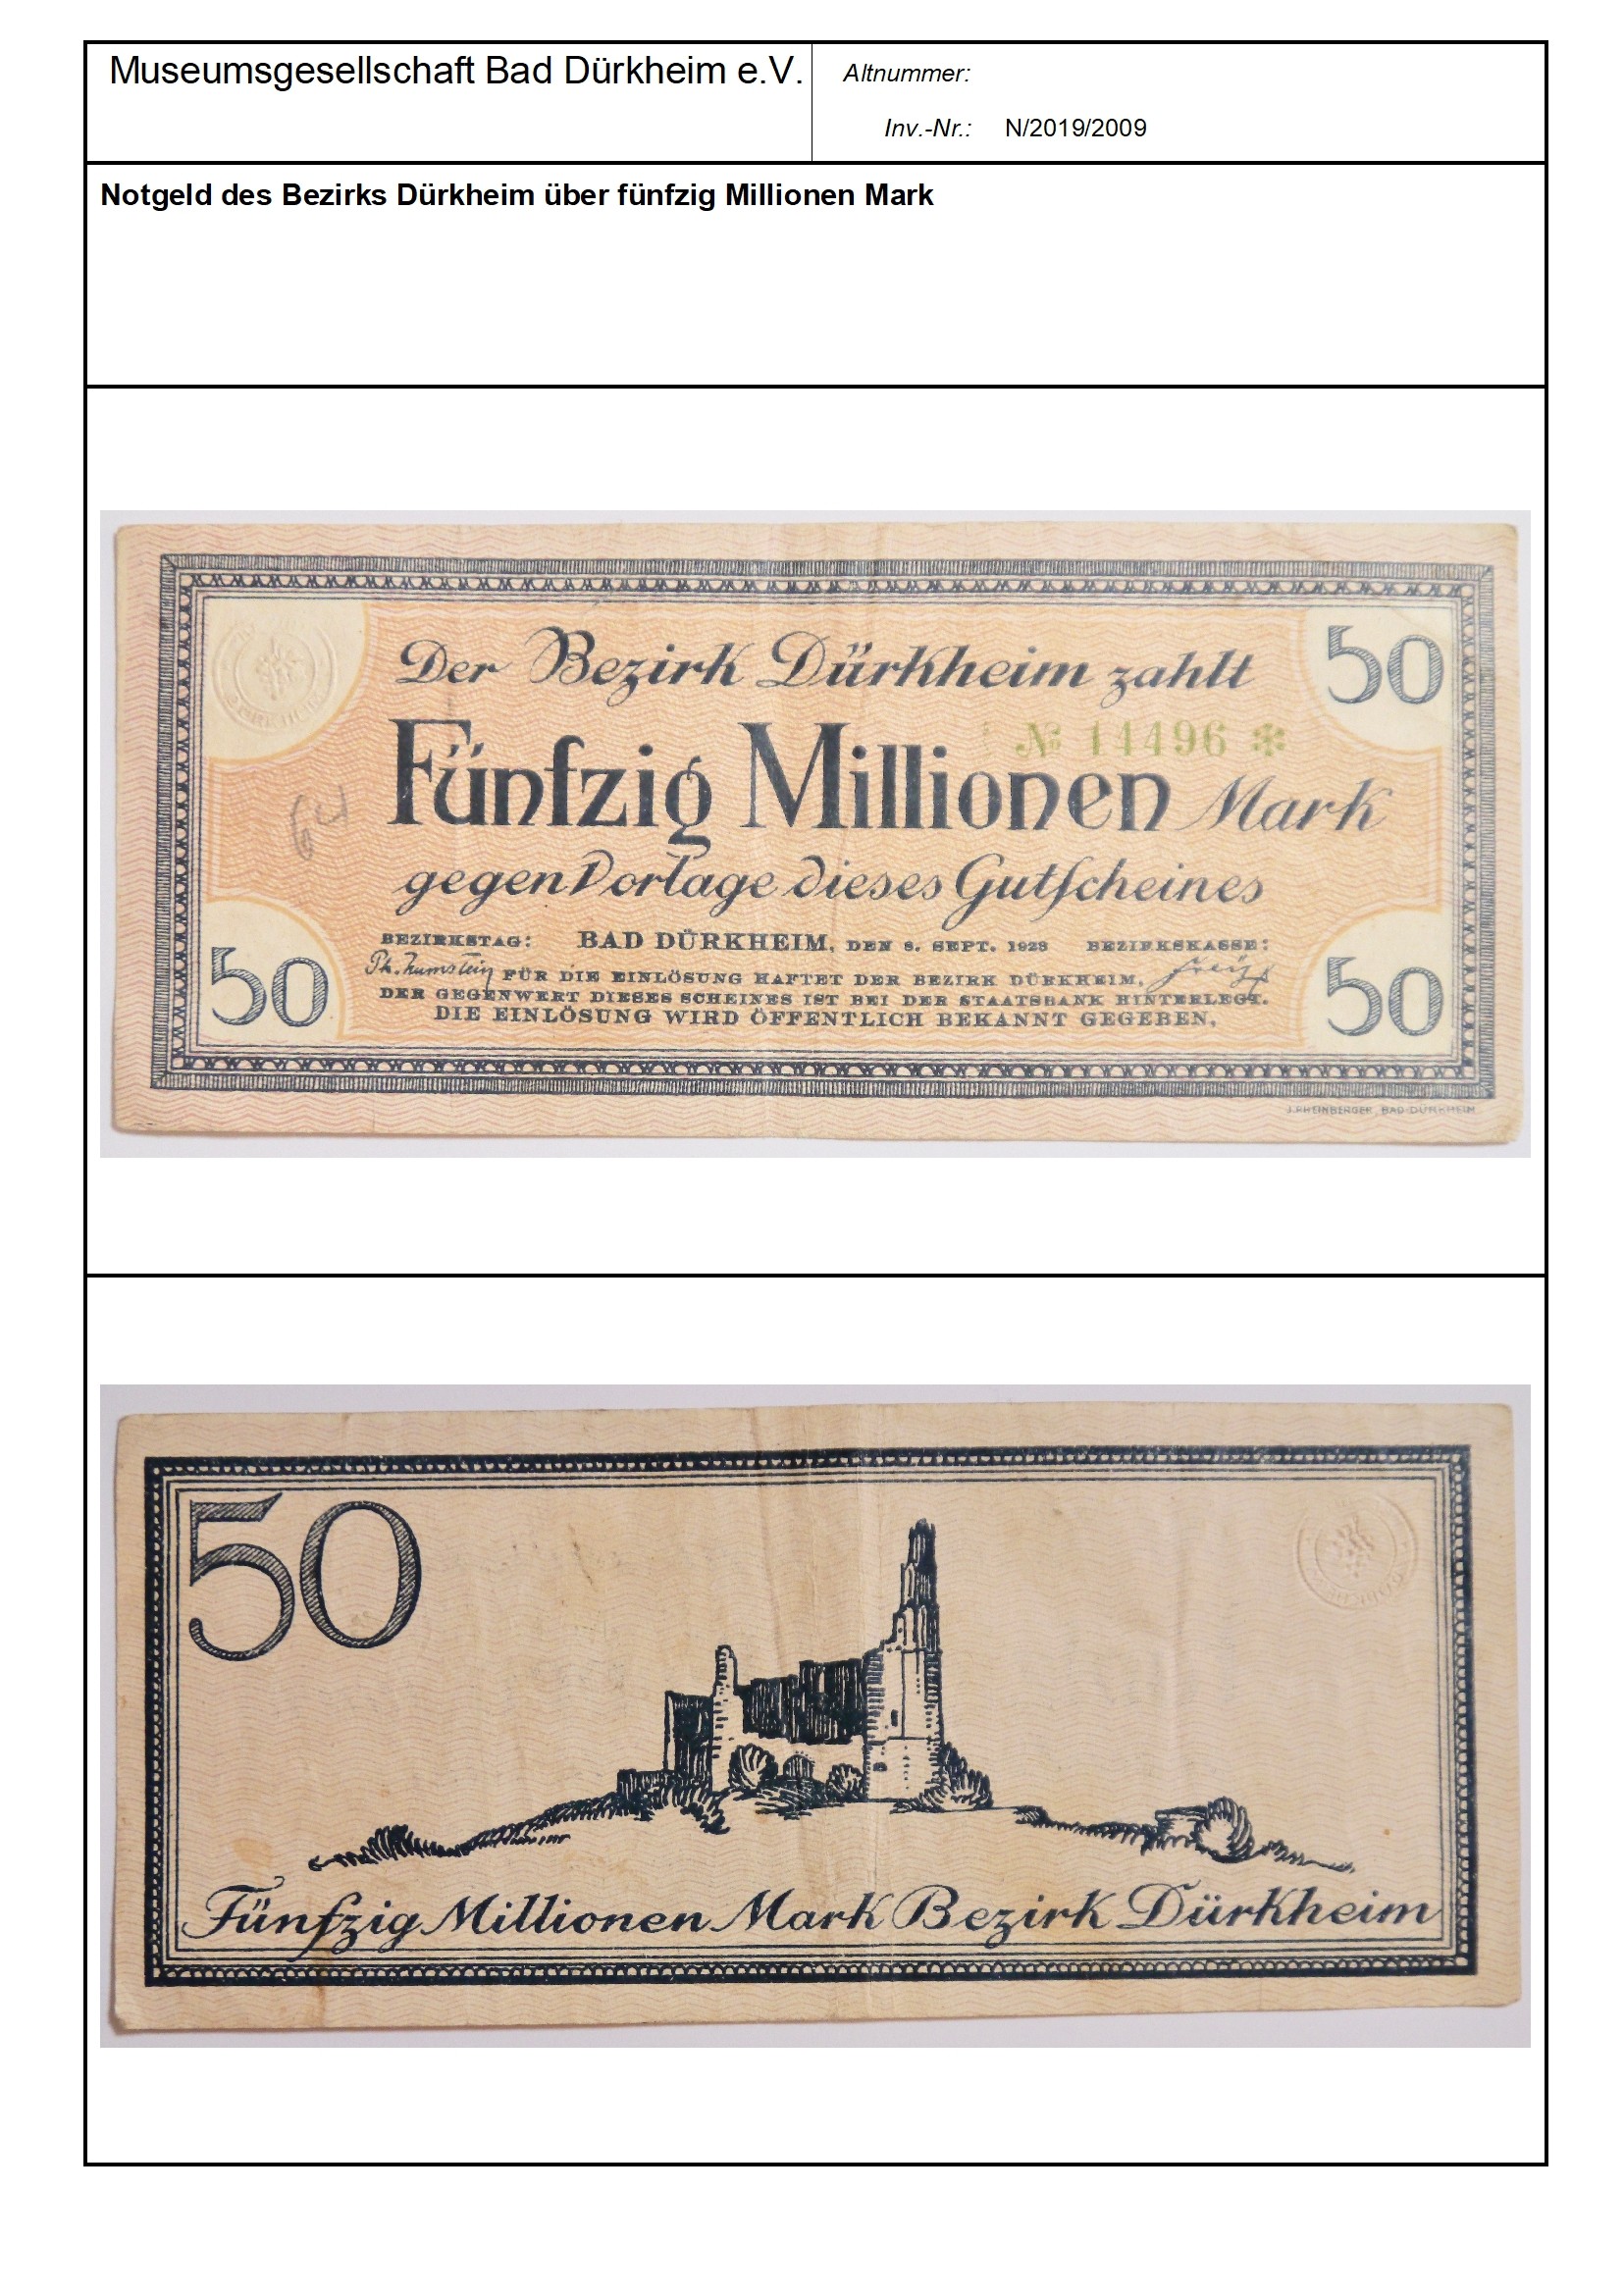 Notgeld des Bezirks Dürkheim über fünfzig Millionen Mark
Serien-Nummer: 14496 (Museumsgesellschaft Bad Dürkheim e.V. CC BY-NC-SA)